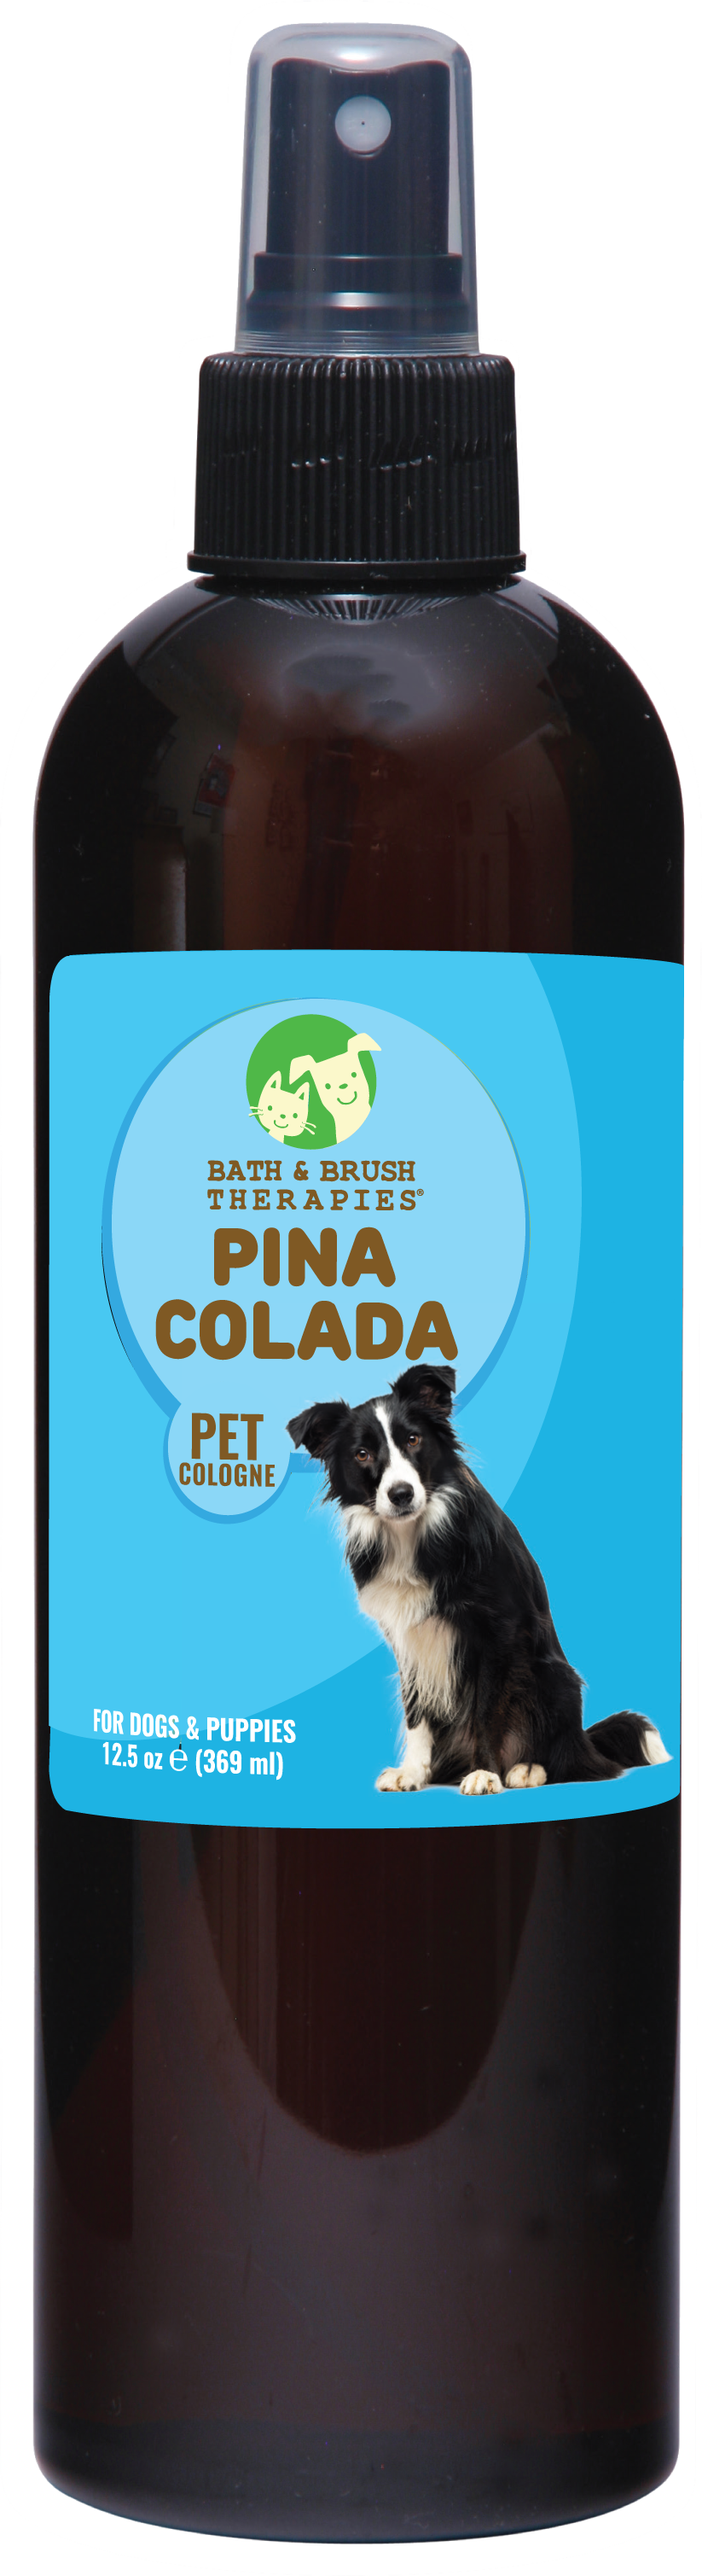 Pina Colada Pet Cologne | Bath & Brush Therapies®